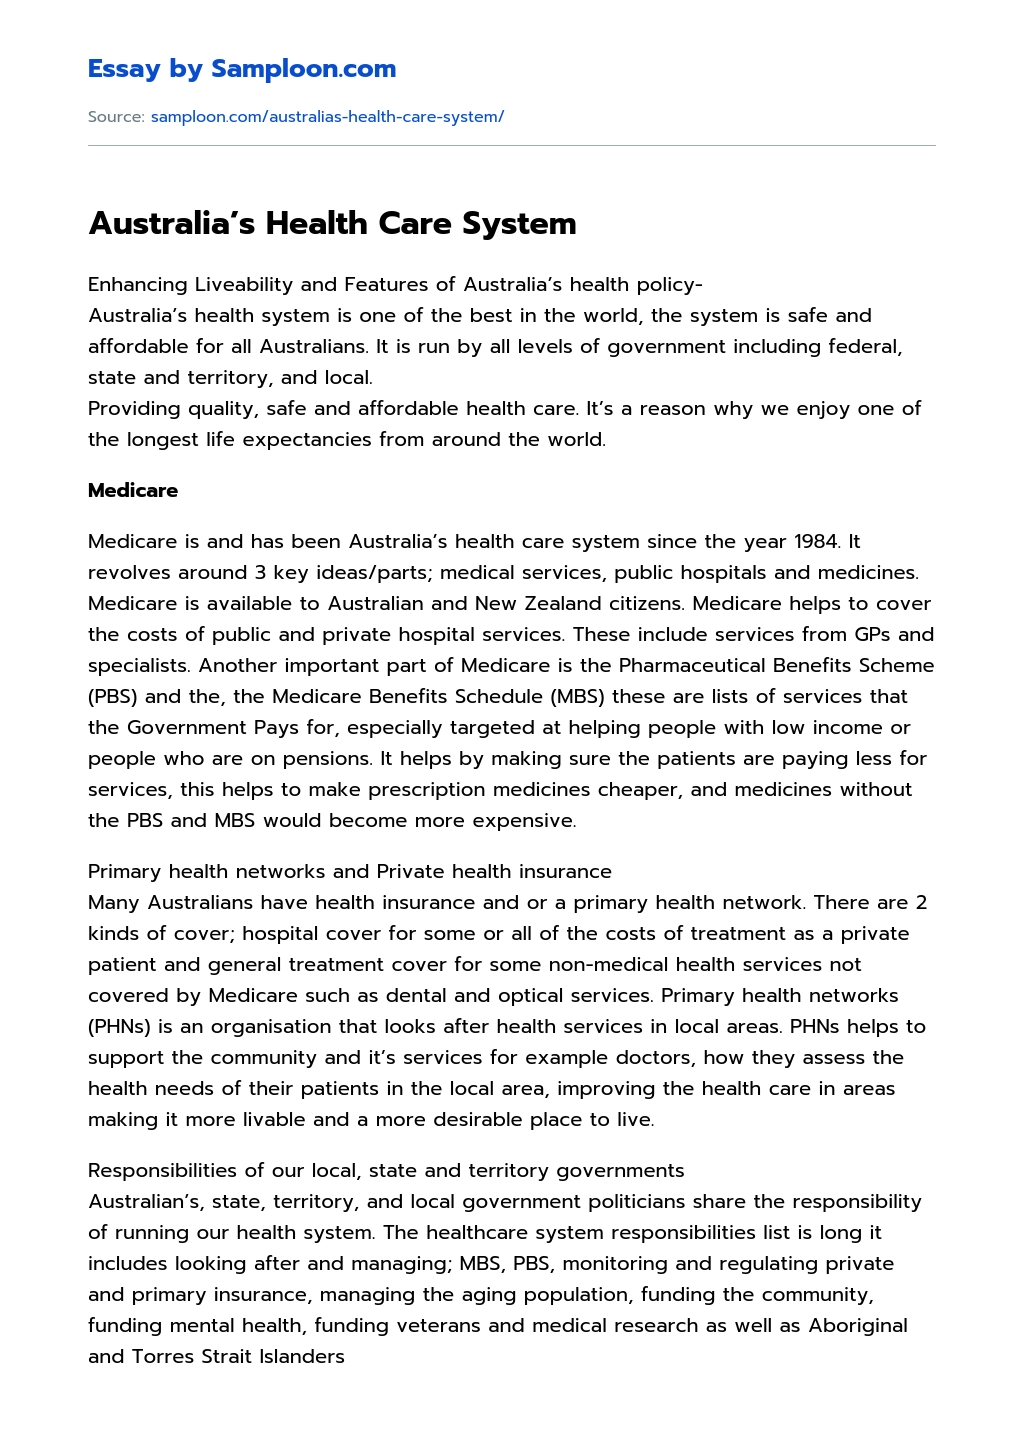 Australia’s Health Care System essay